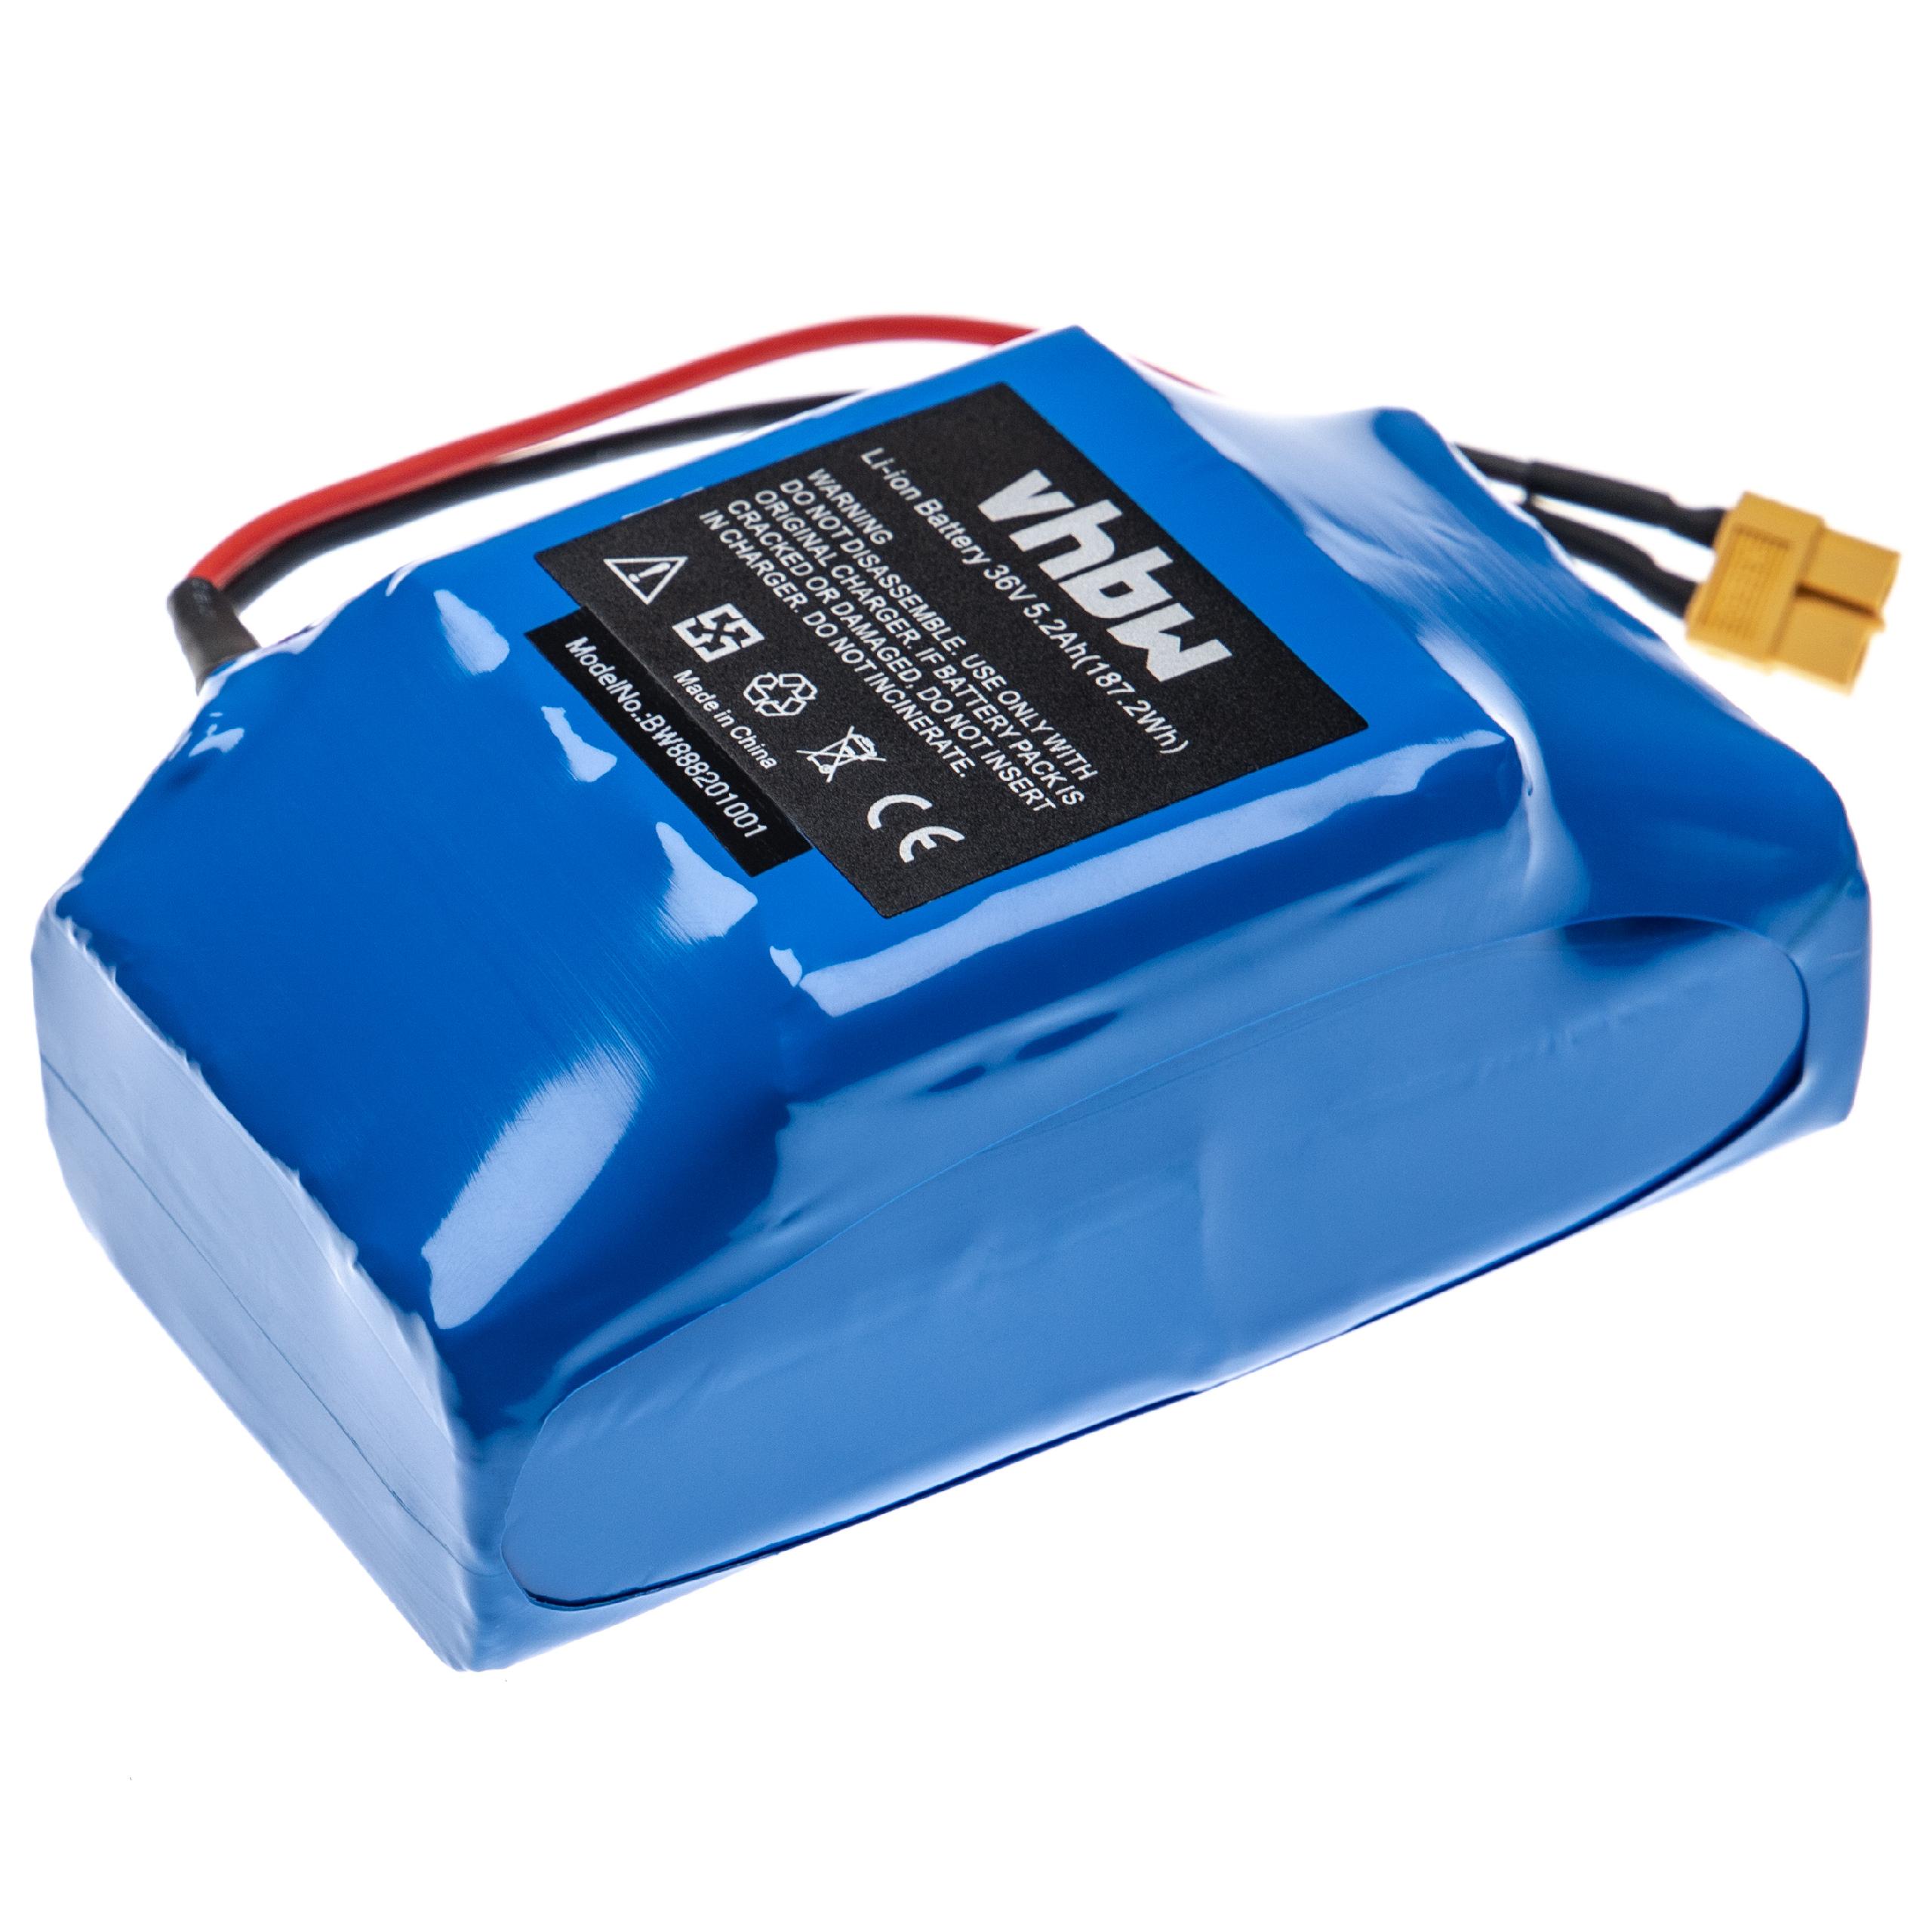 Batería reemplaza Bluewheel 10IXR19/65-2, HPK-11 para aerotabla eléctrica E-Board - 5200 mAh 36 V Li-Ion